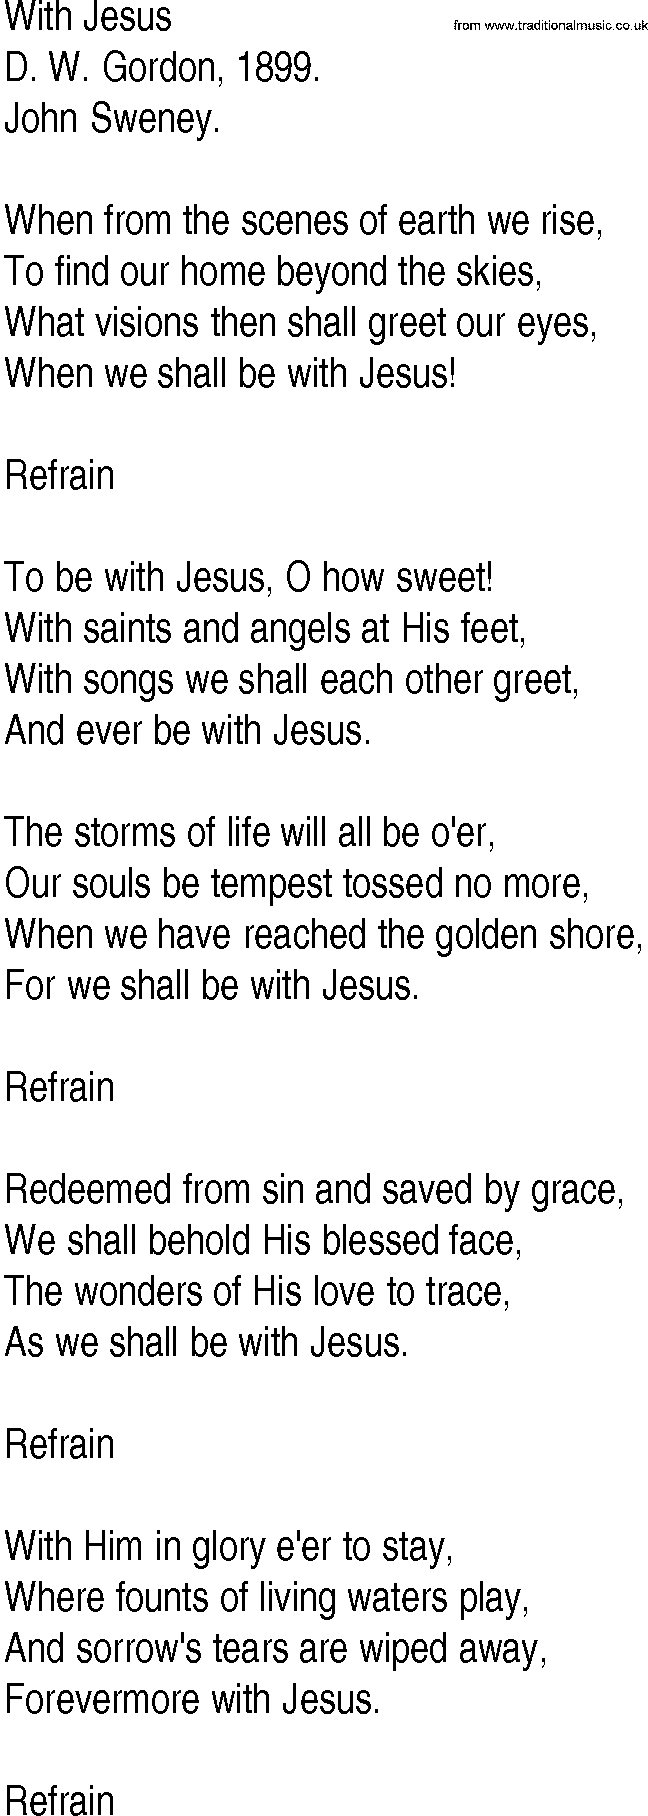 Hymn and Gospel Song: With Jesus by D W Gordon lyrics